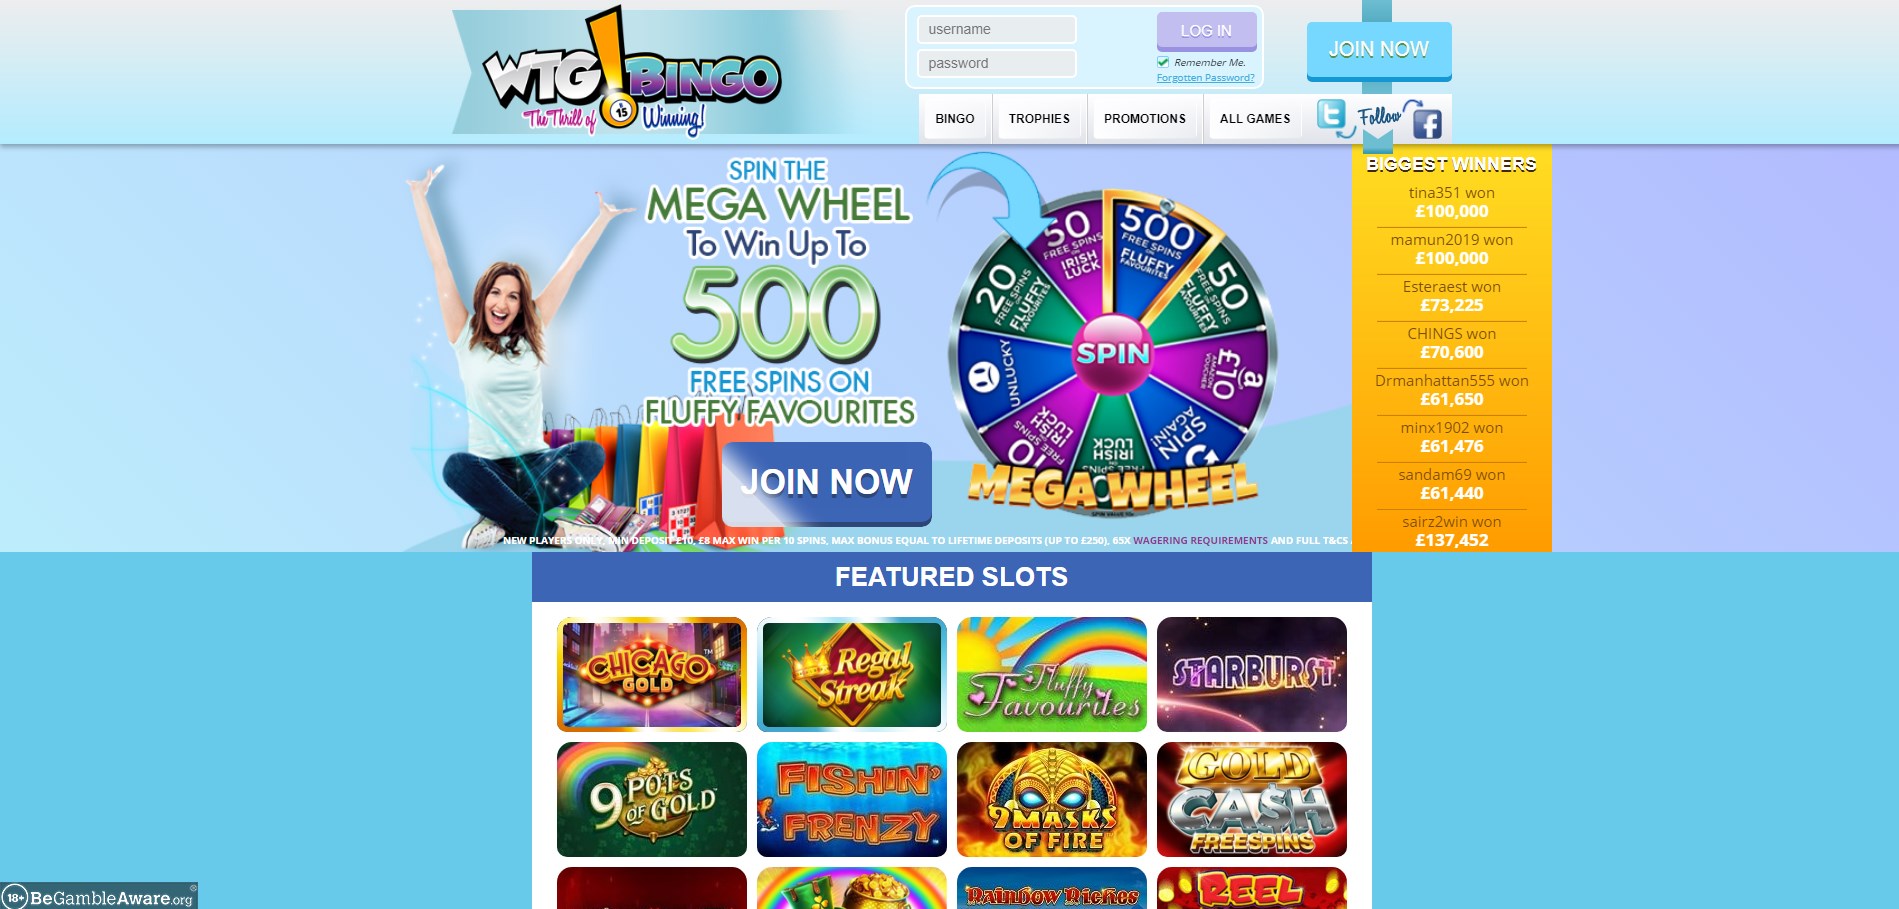 WTG Bingo Casino Review